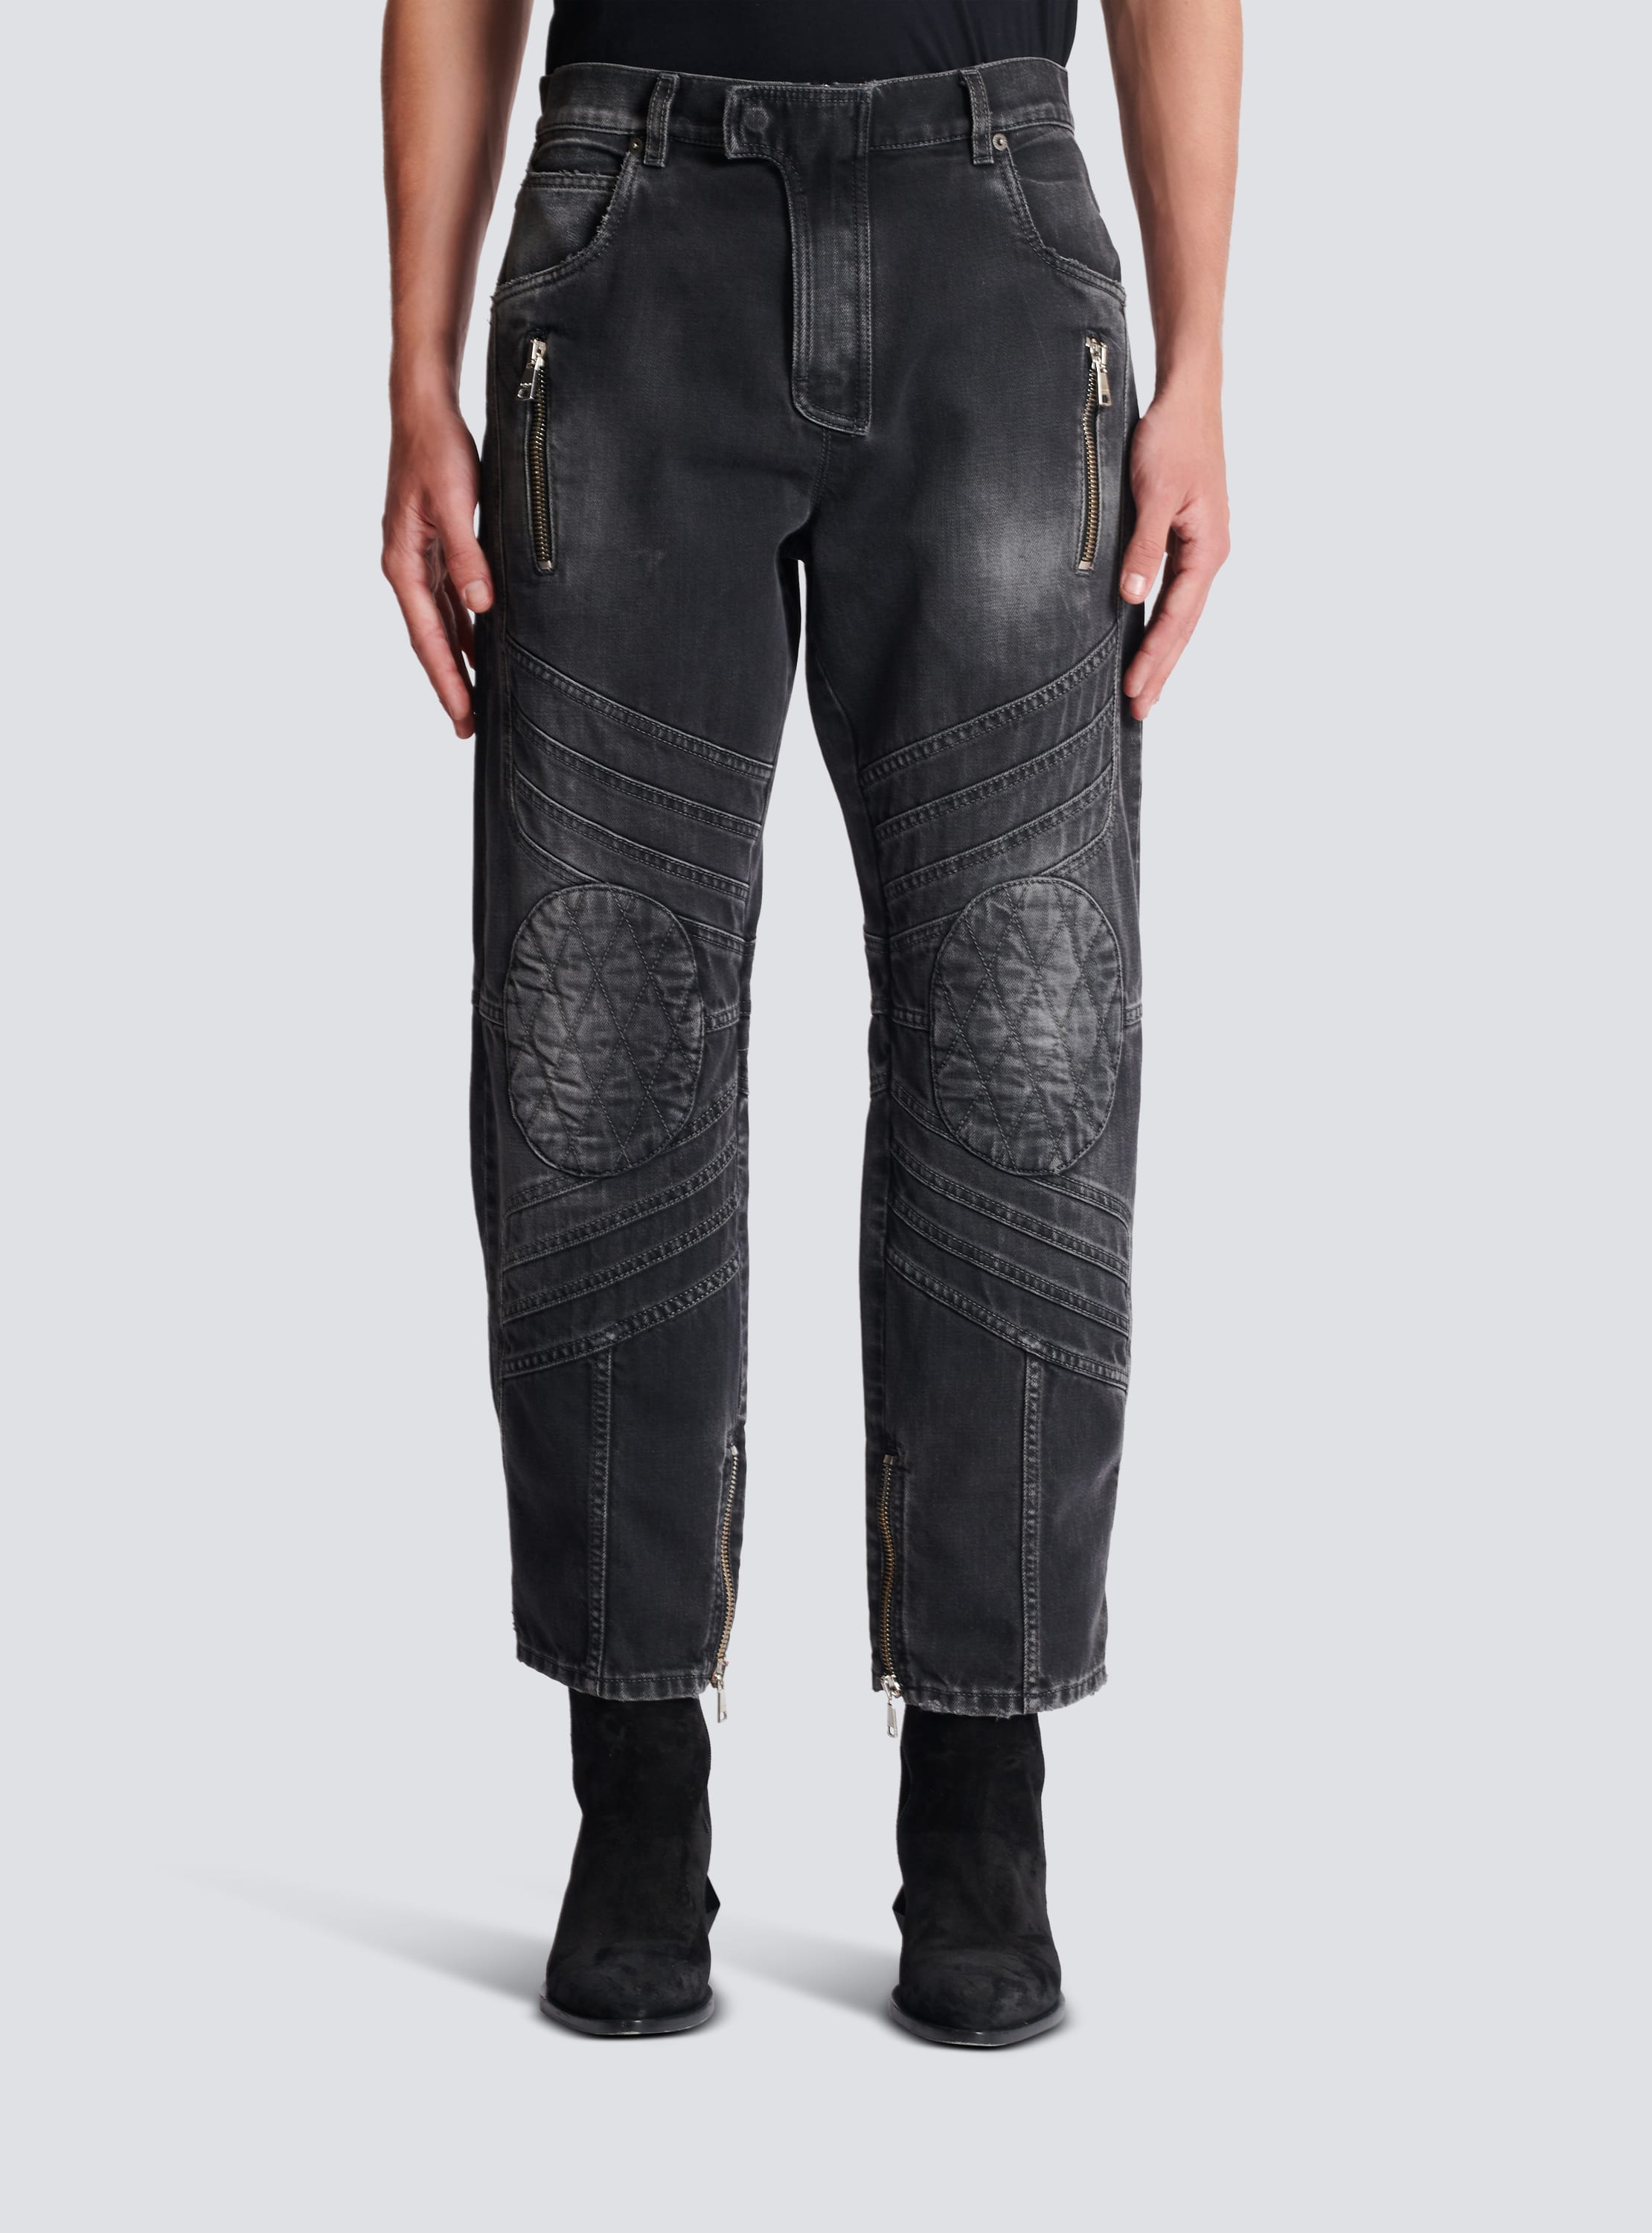 Balmain Leather Biker Jeans Secod Kultuee Flash Sales | website.jkuat.ac.ke